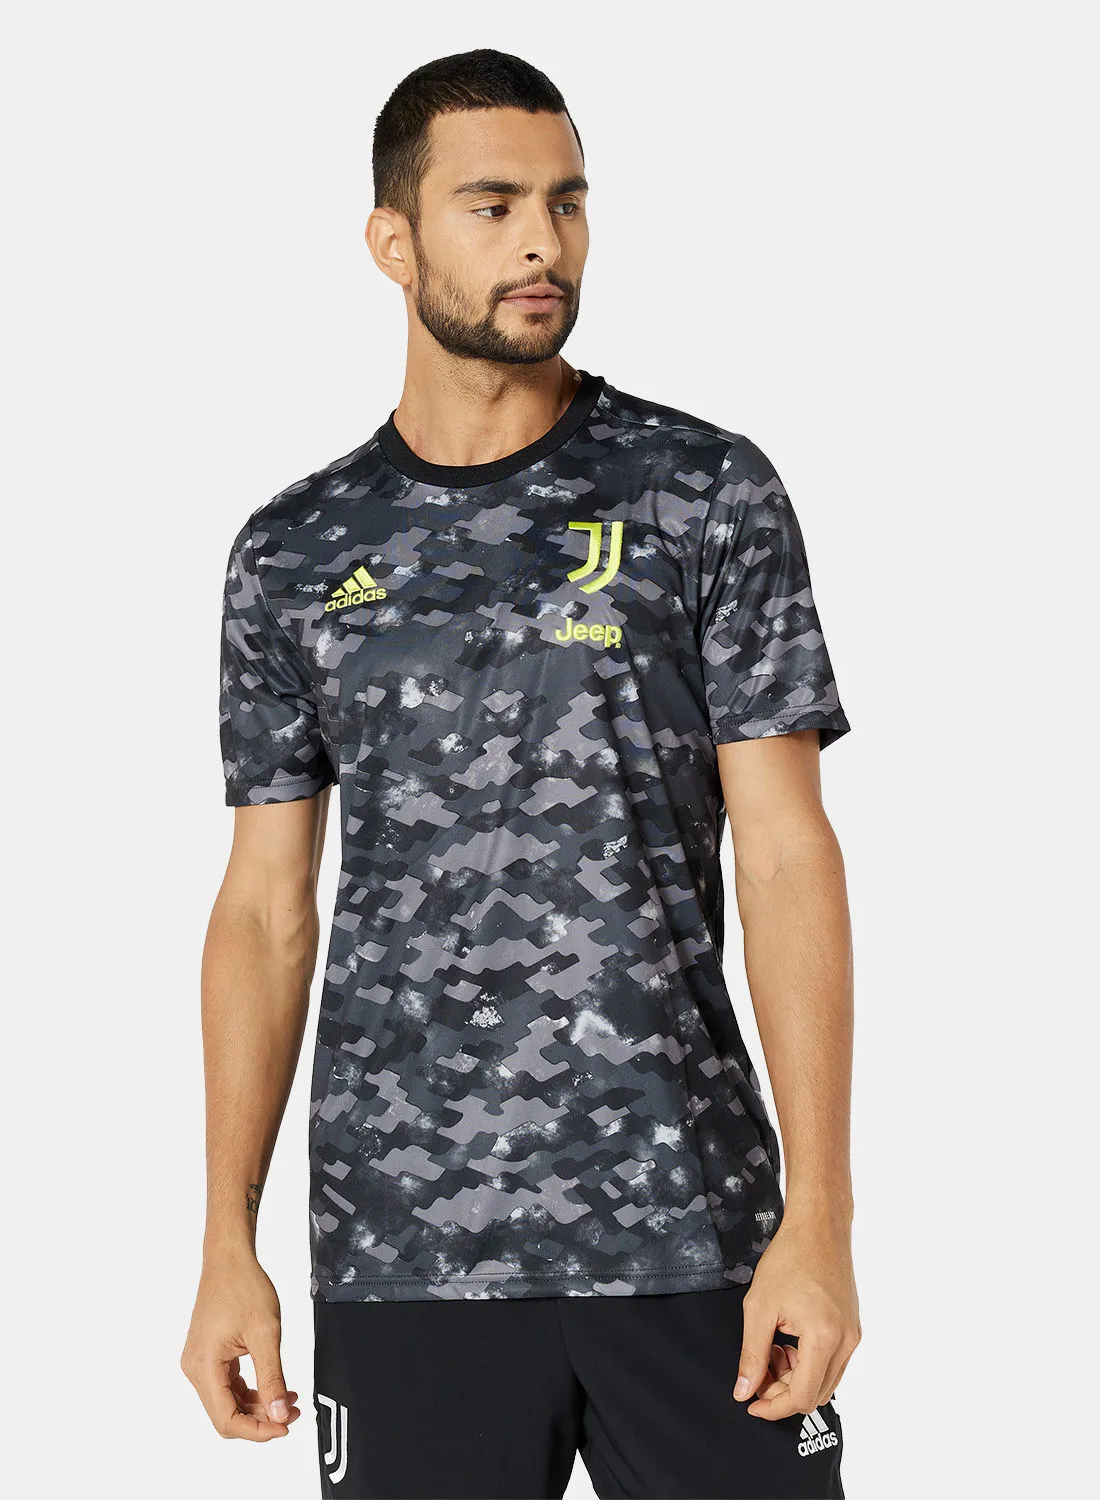 Adidas Juventus Football Club Pre-Match Jersey Grey/Black